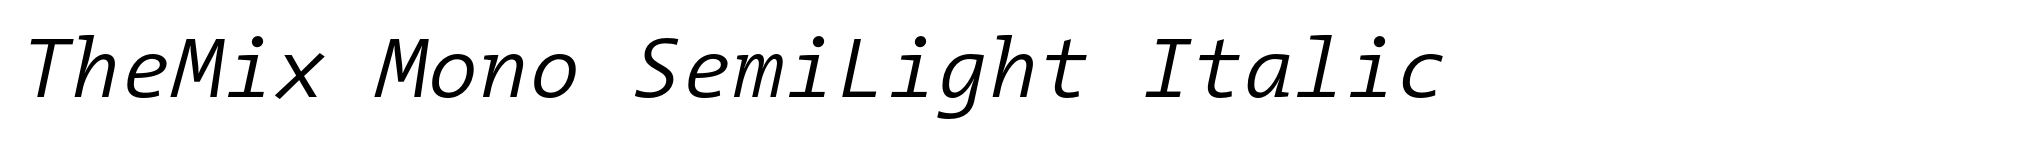 TheMix Mono SemiLight Italic image